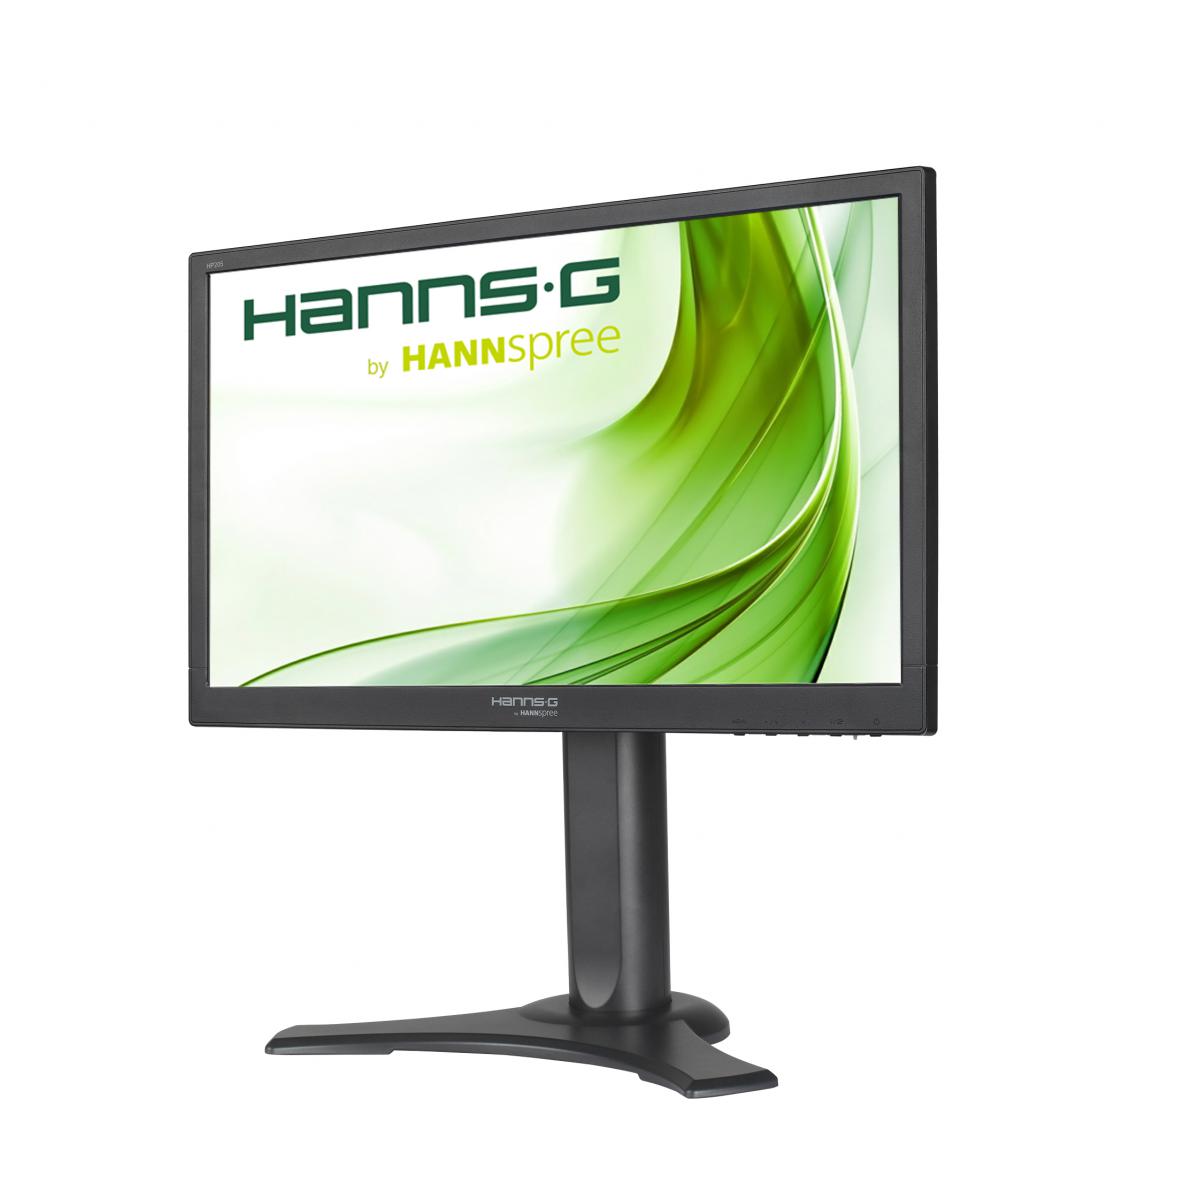 Hannspree - HANNSPREE HANNS-G HP205DJB 19.5inch TFT LED-BL 5ms HANNS-G HP205DJB 19,5inch TFT LED-BL 1600x900 HD 5ms 250cd 80Mio:1 1000:1 16:9 VGA DVI D-Sub VESA TCO6.0 adjustable black - Moniteur PC